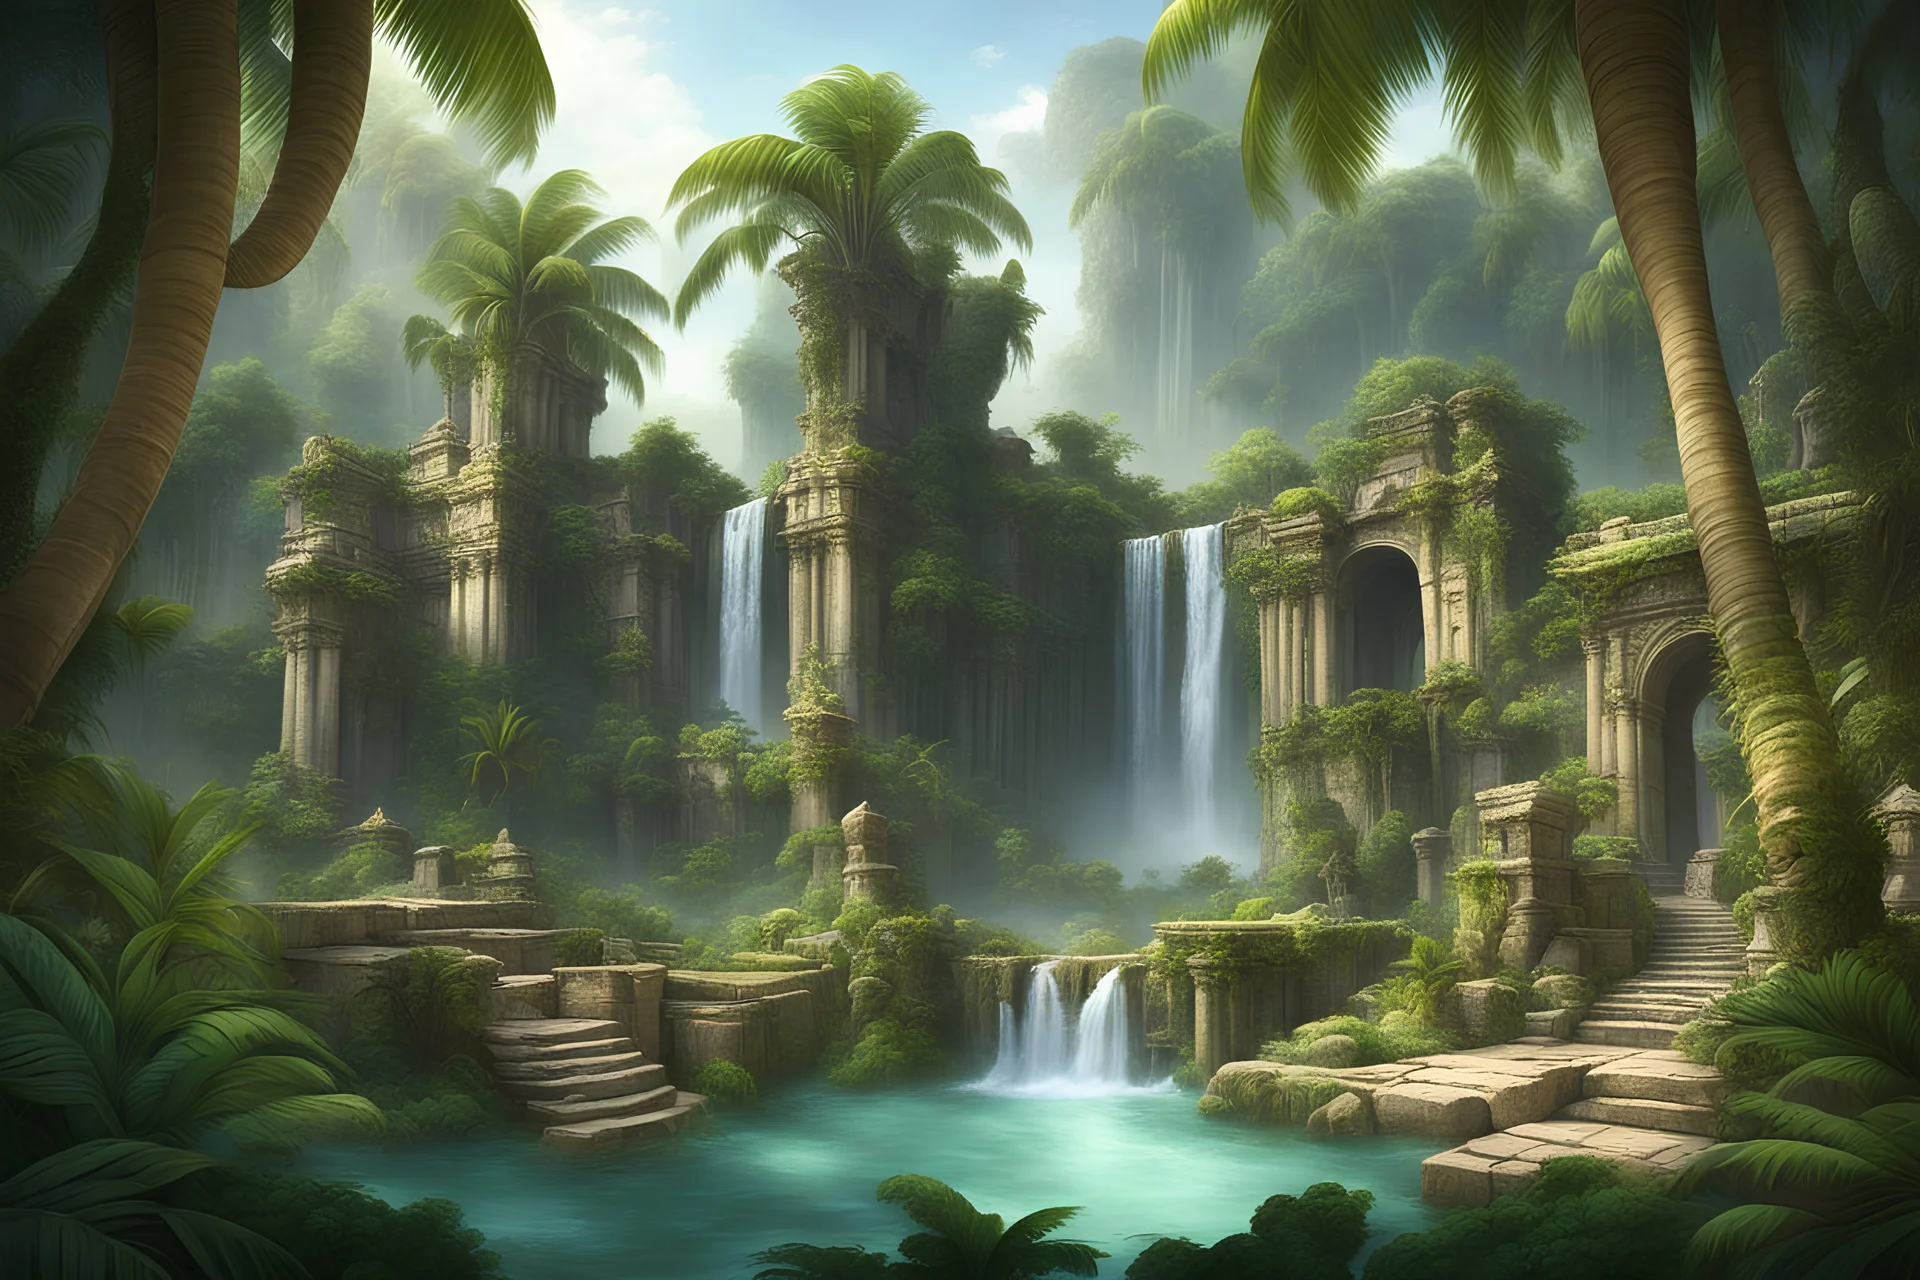 храмы эльдорадо в джунглях пальмы скалы водопады лианы двор из камней руины фэнтези арт